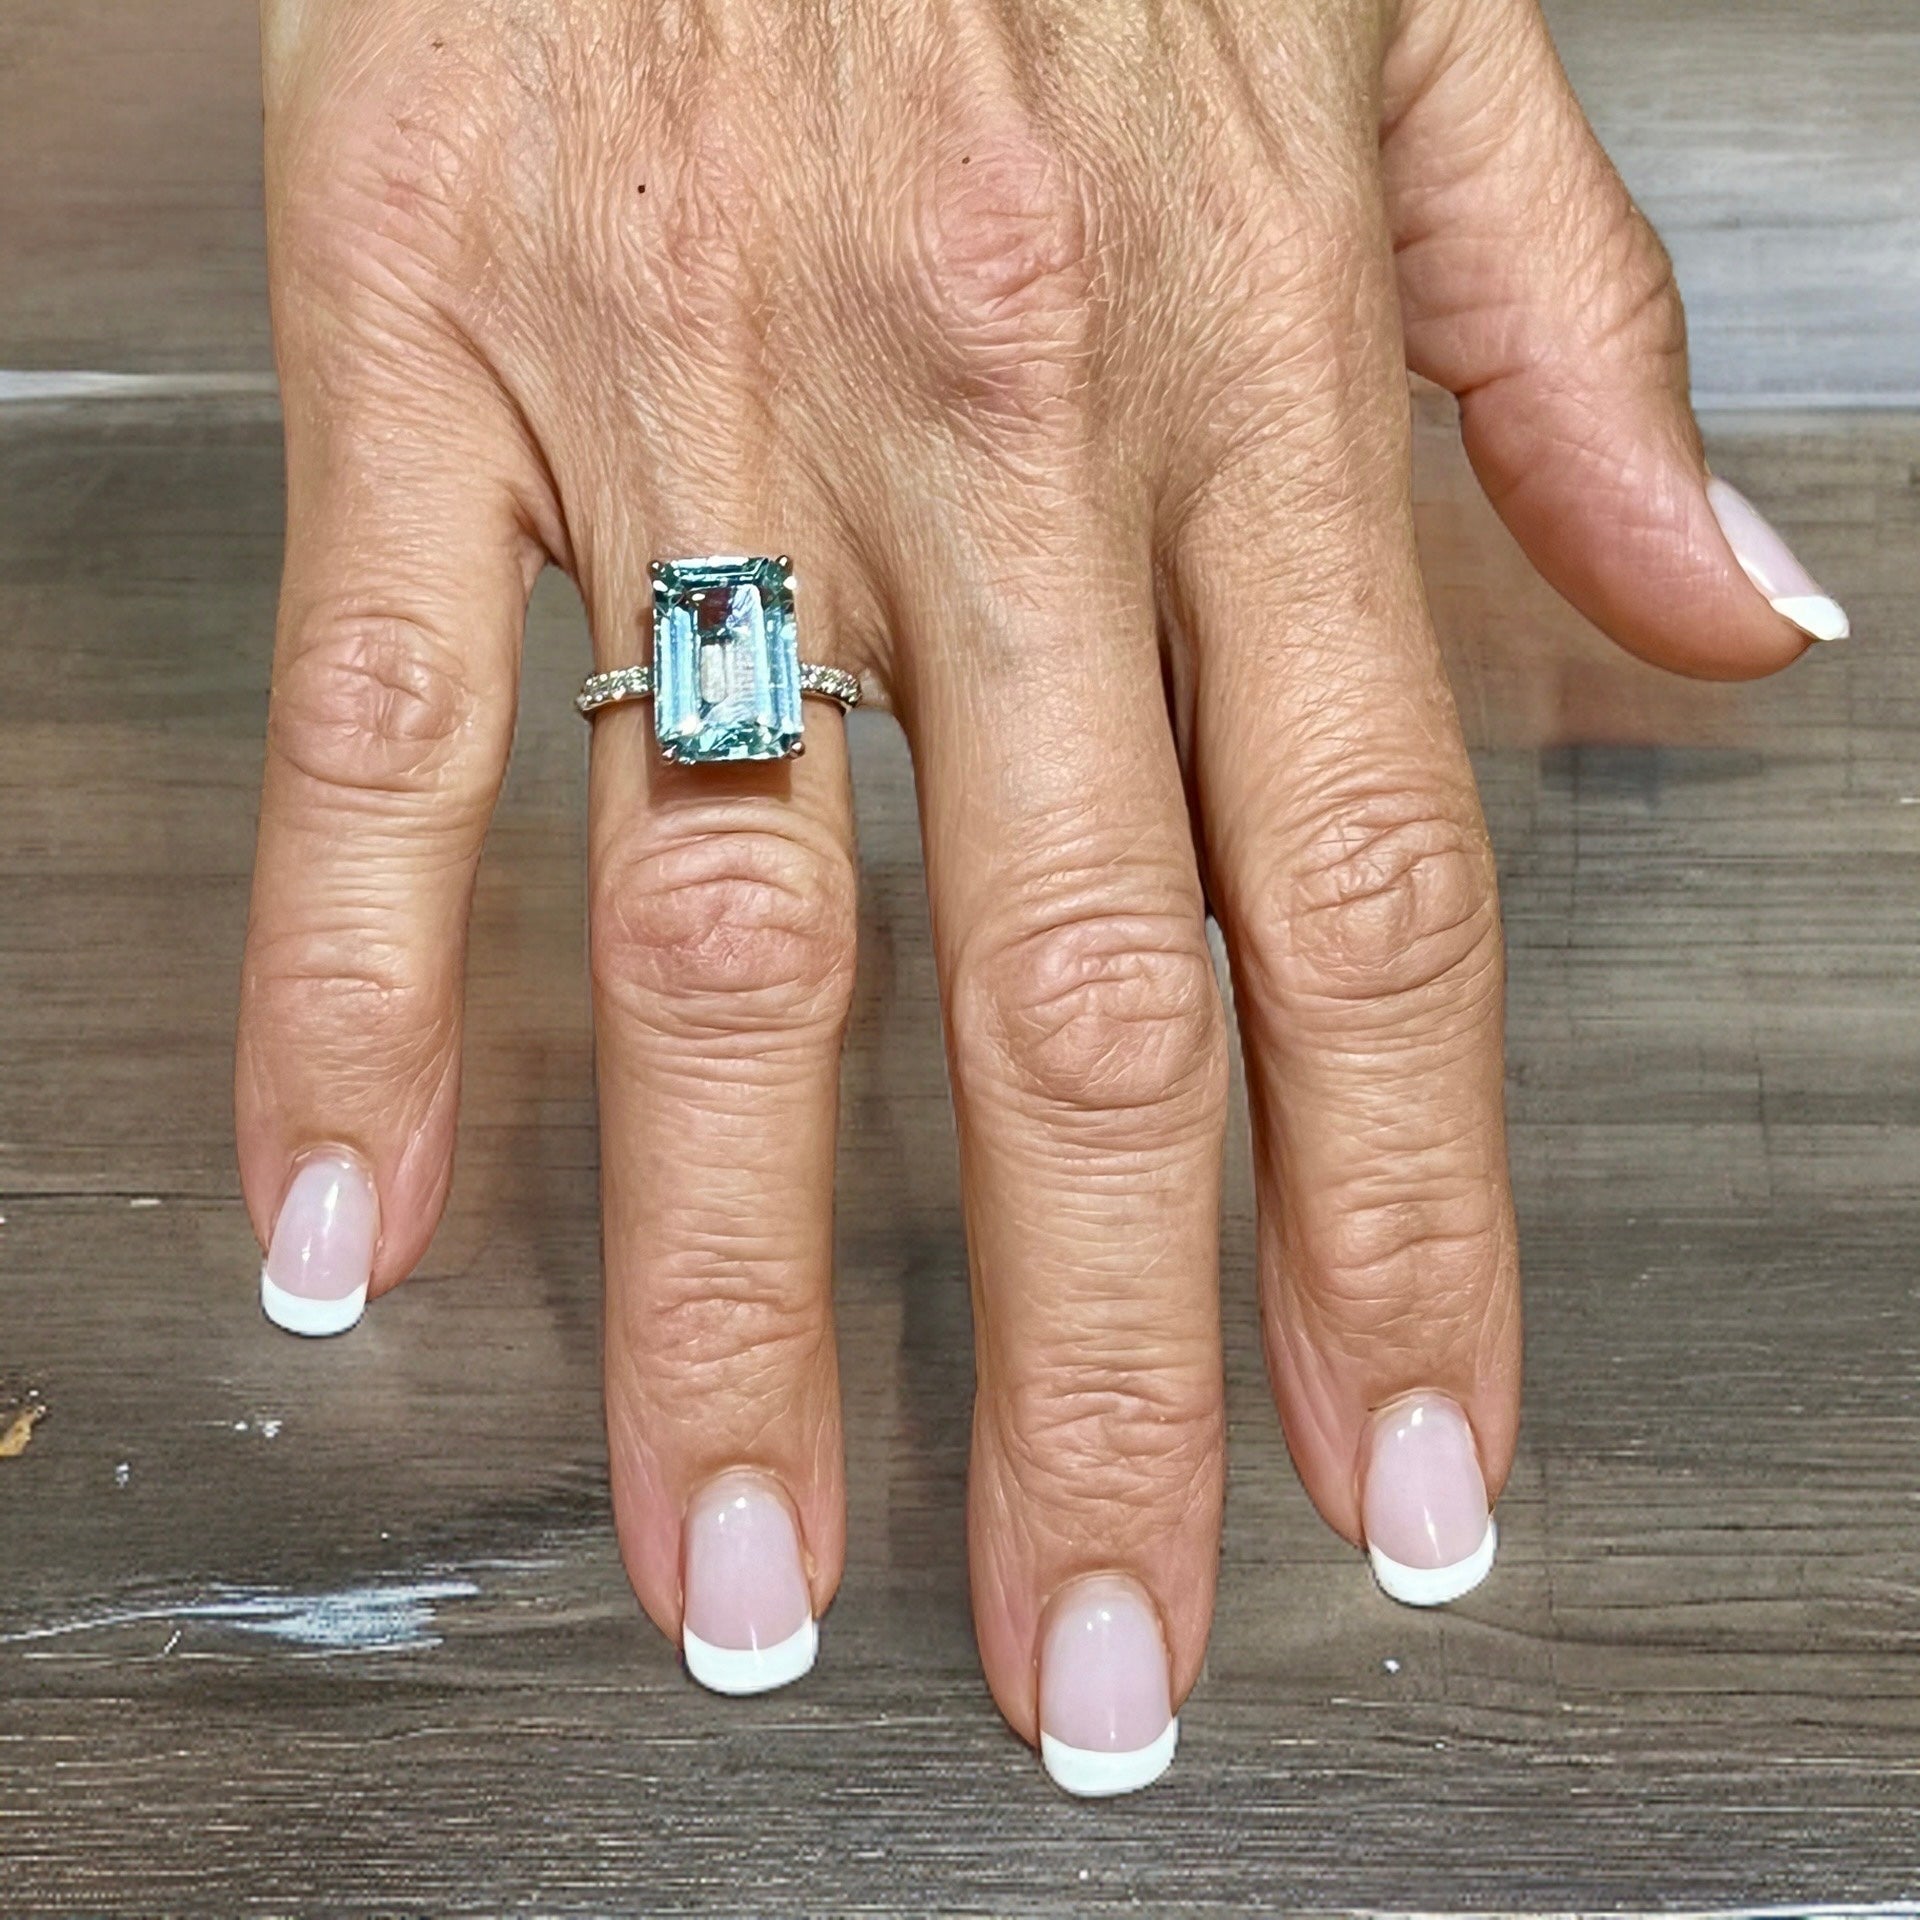 Natural Aquamarine Diamond Ring Size 6.5 14k W Gold 5.78 TCW Certified $4,795 217097 - Certified Fine Jewelry